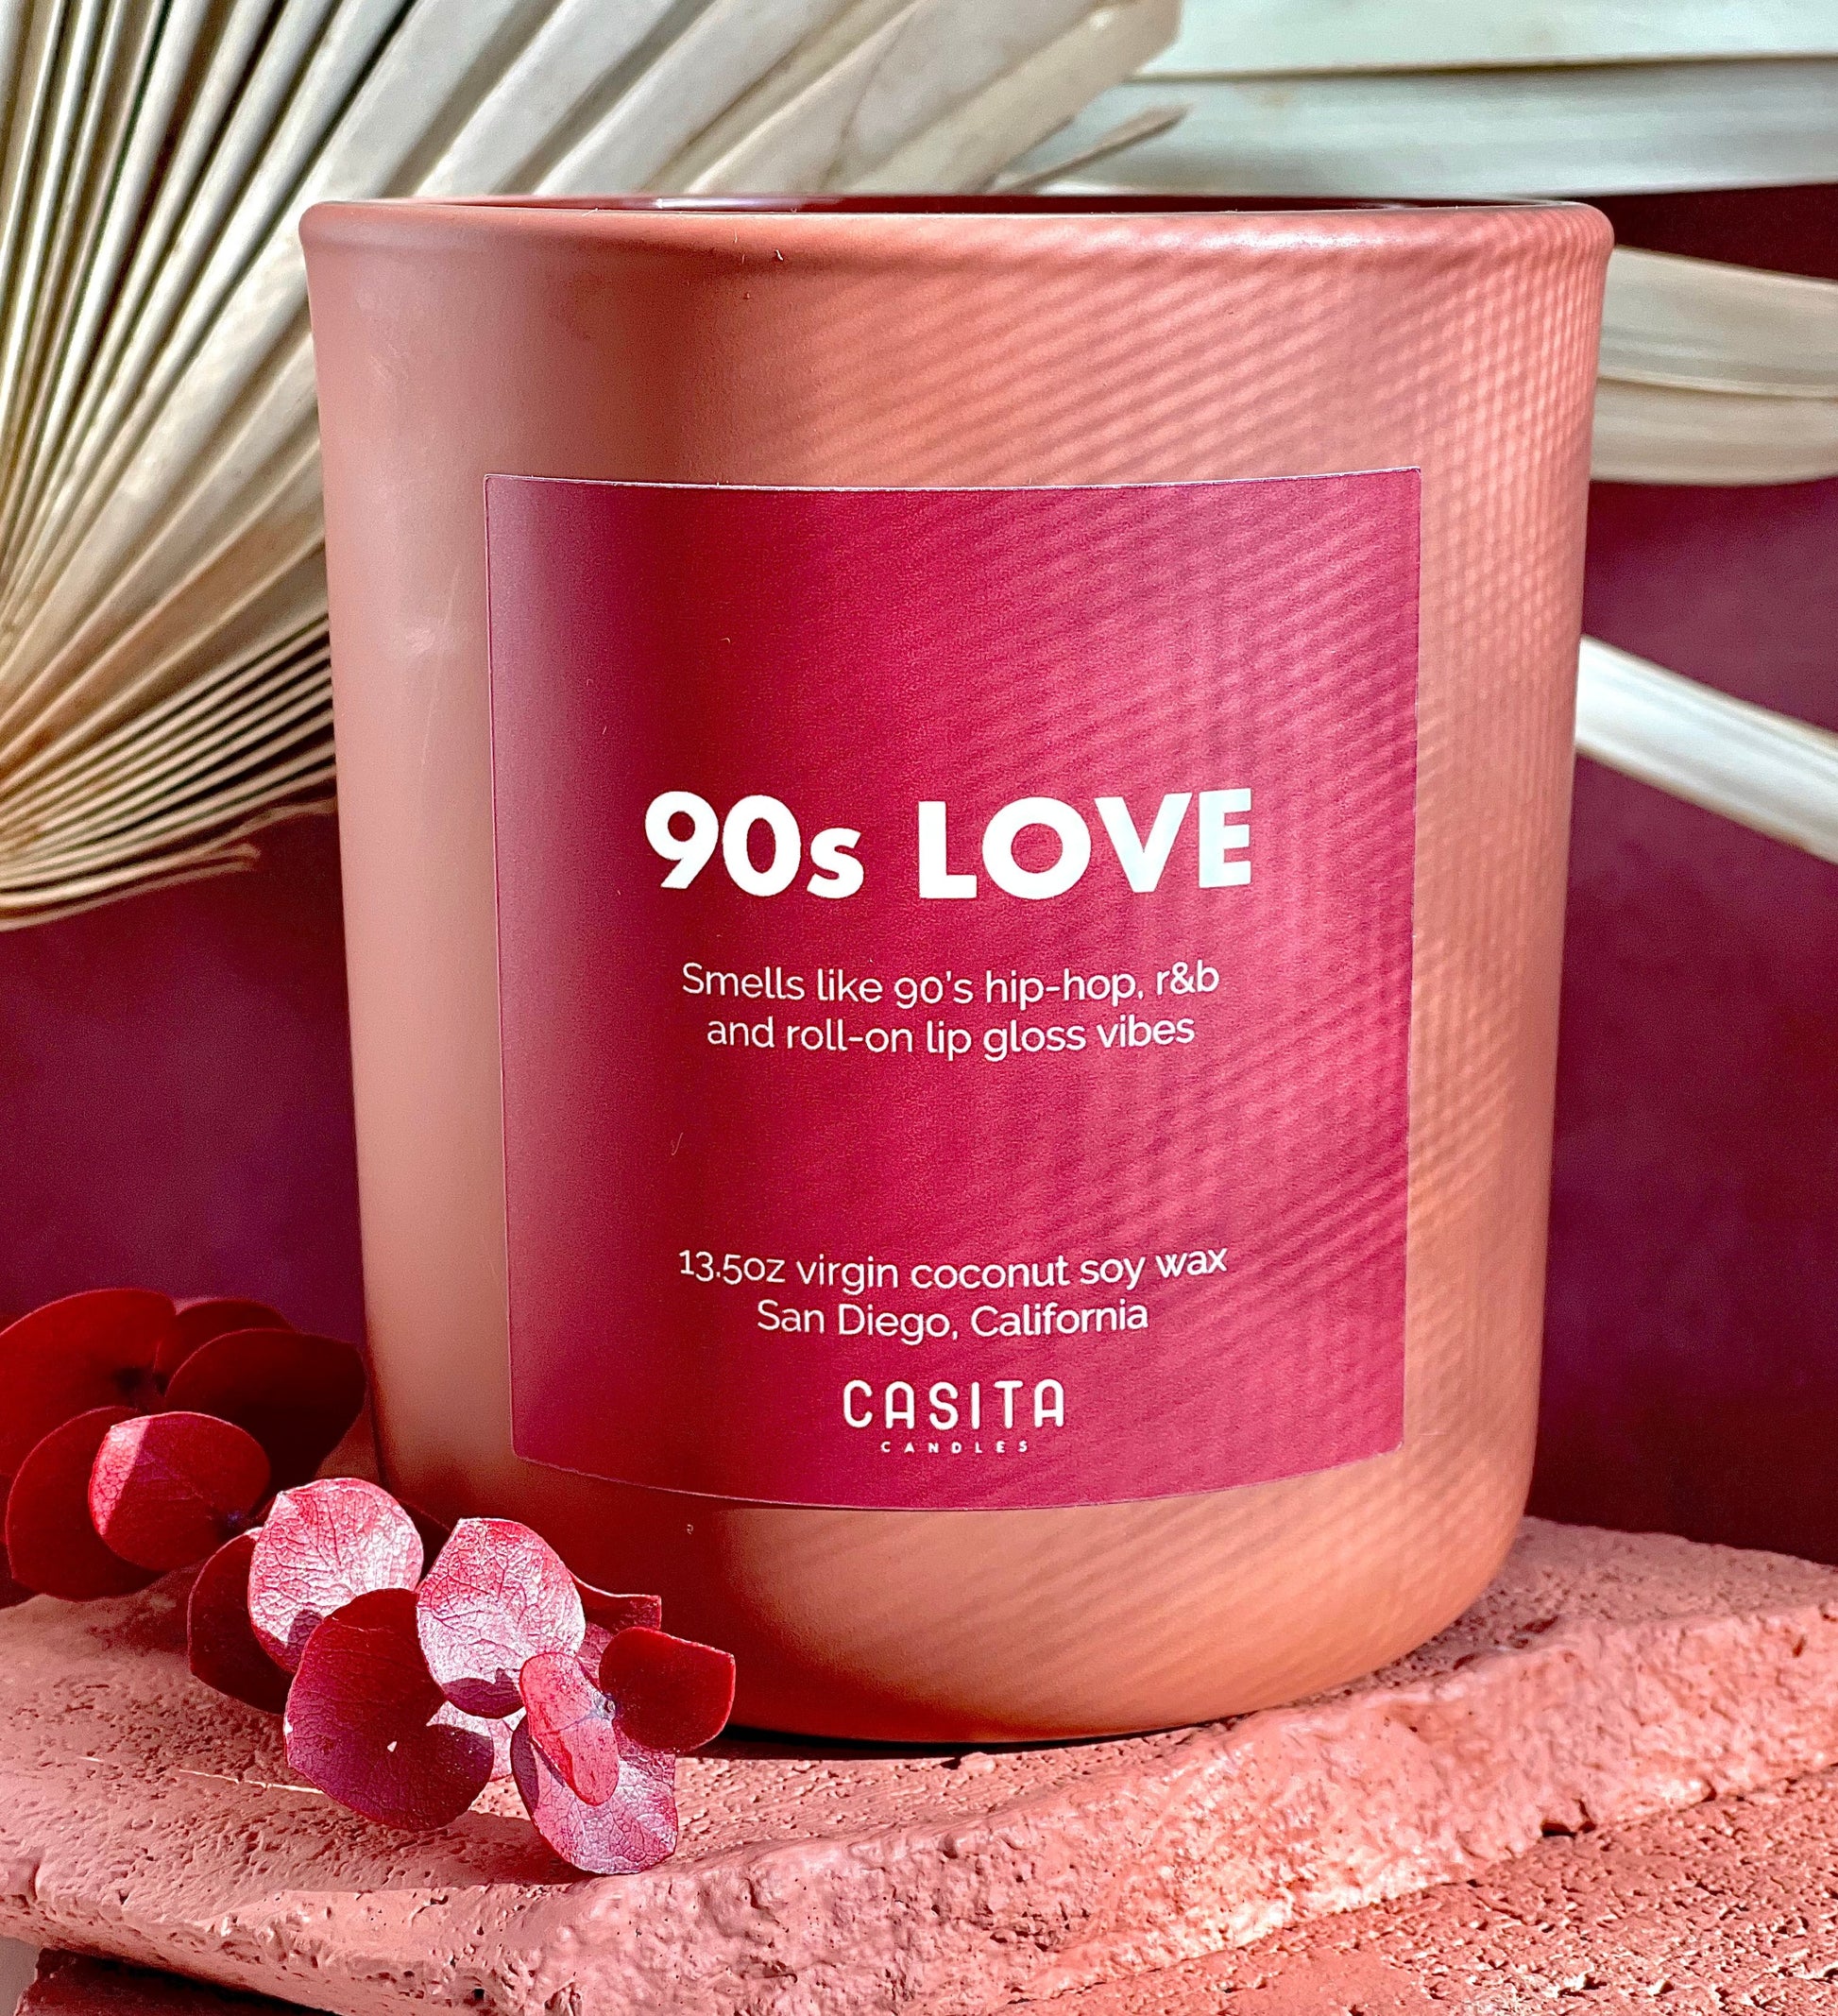 90s LOVE - Casita Candles